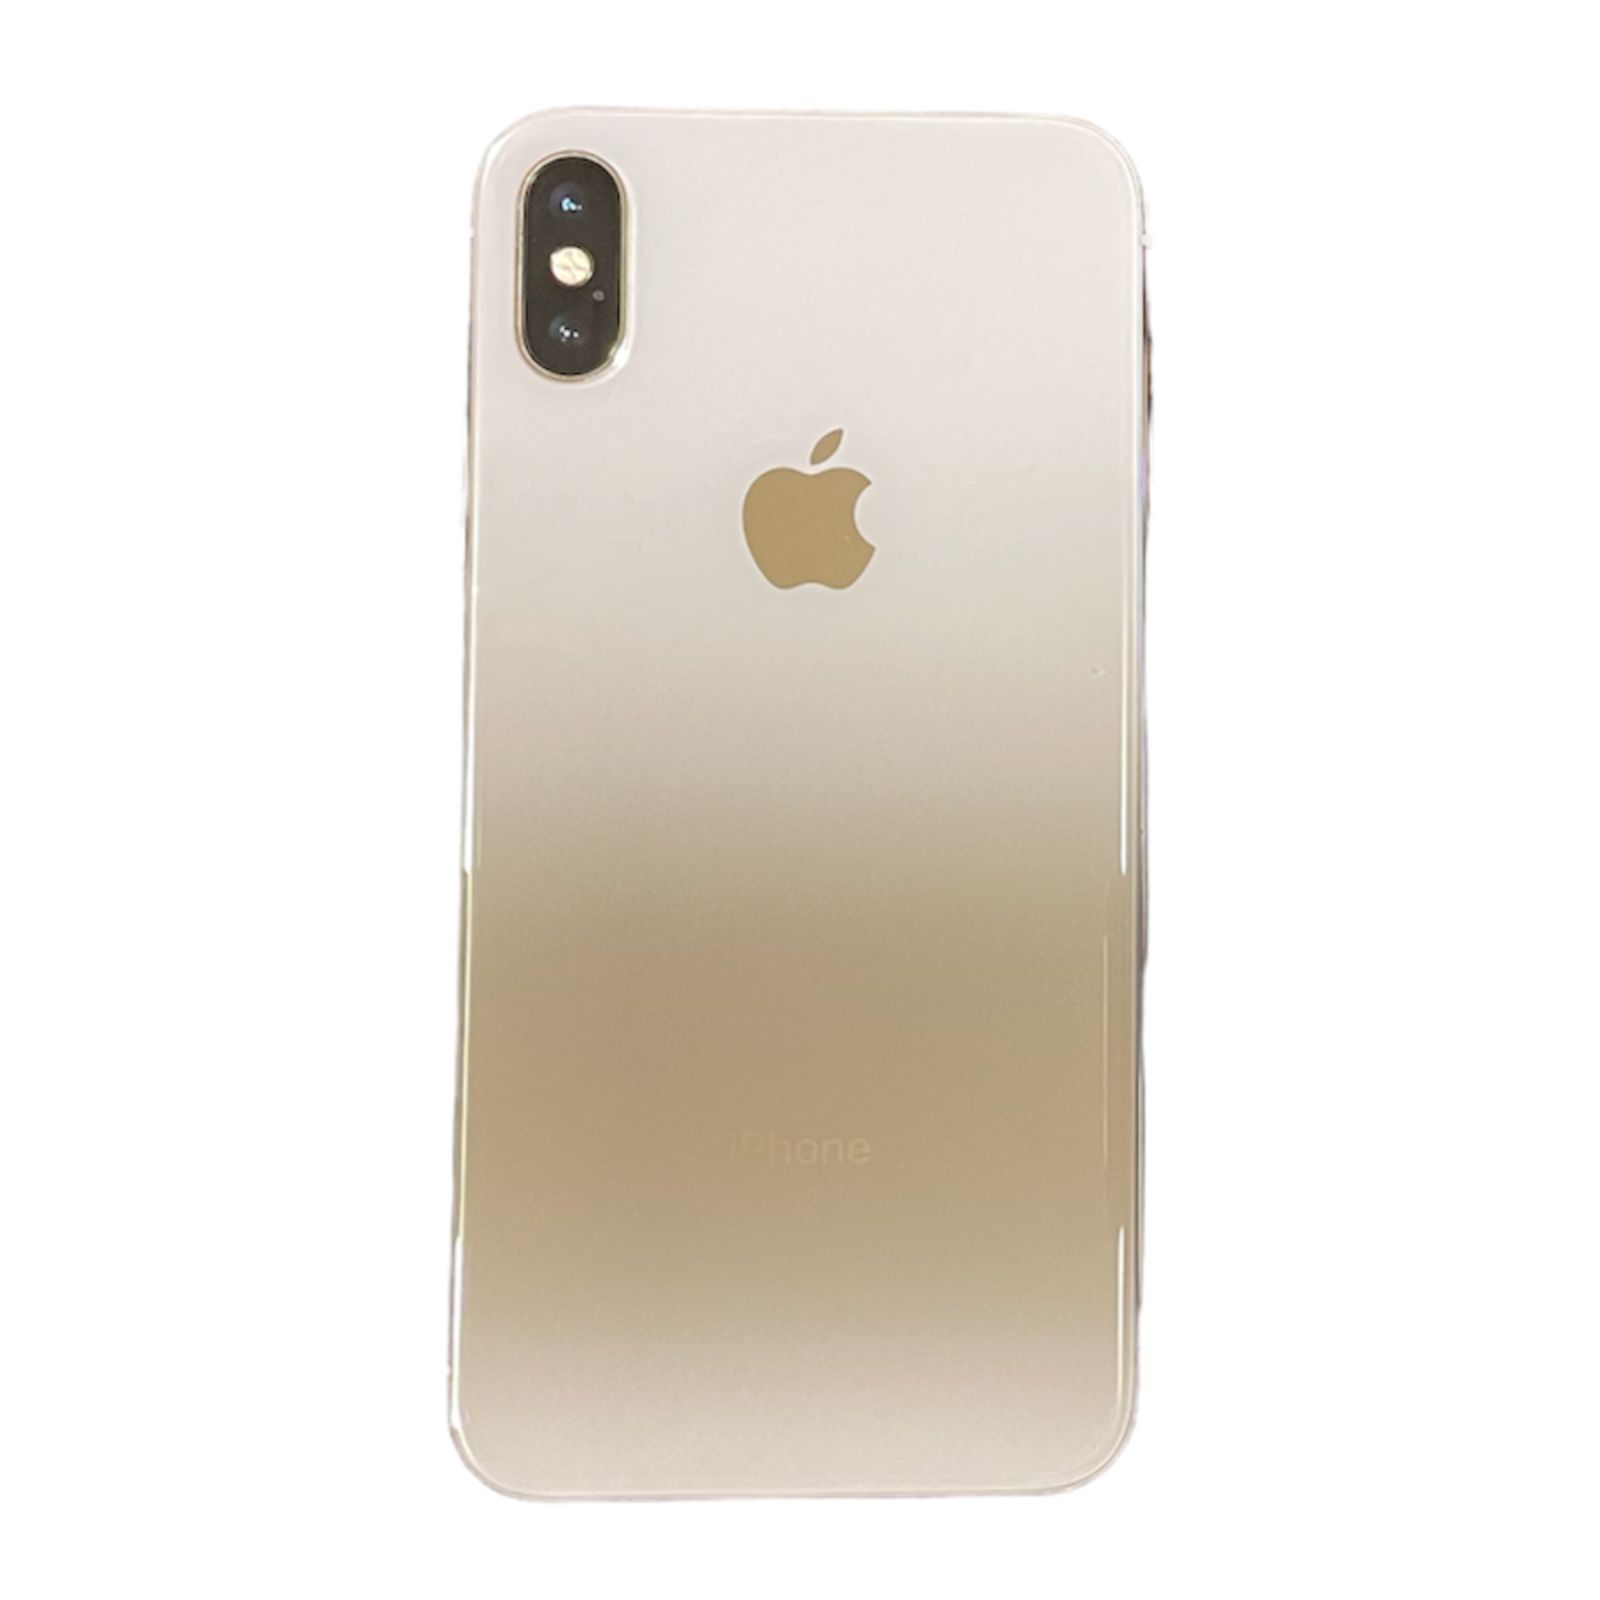 Apple iPhone XS 256GB ゴールド ドコモ(simフリー済み) - 携帯電話、スマートフォン